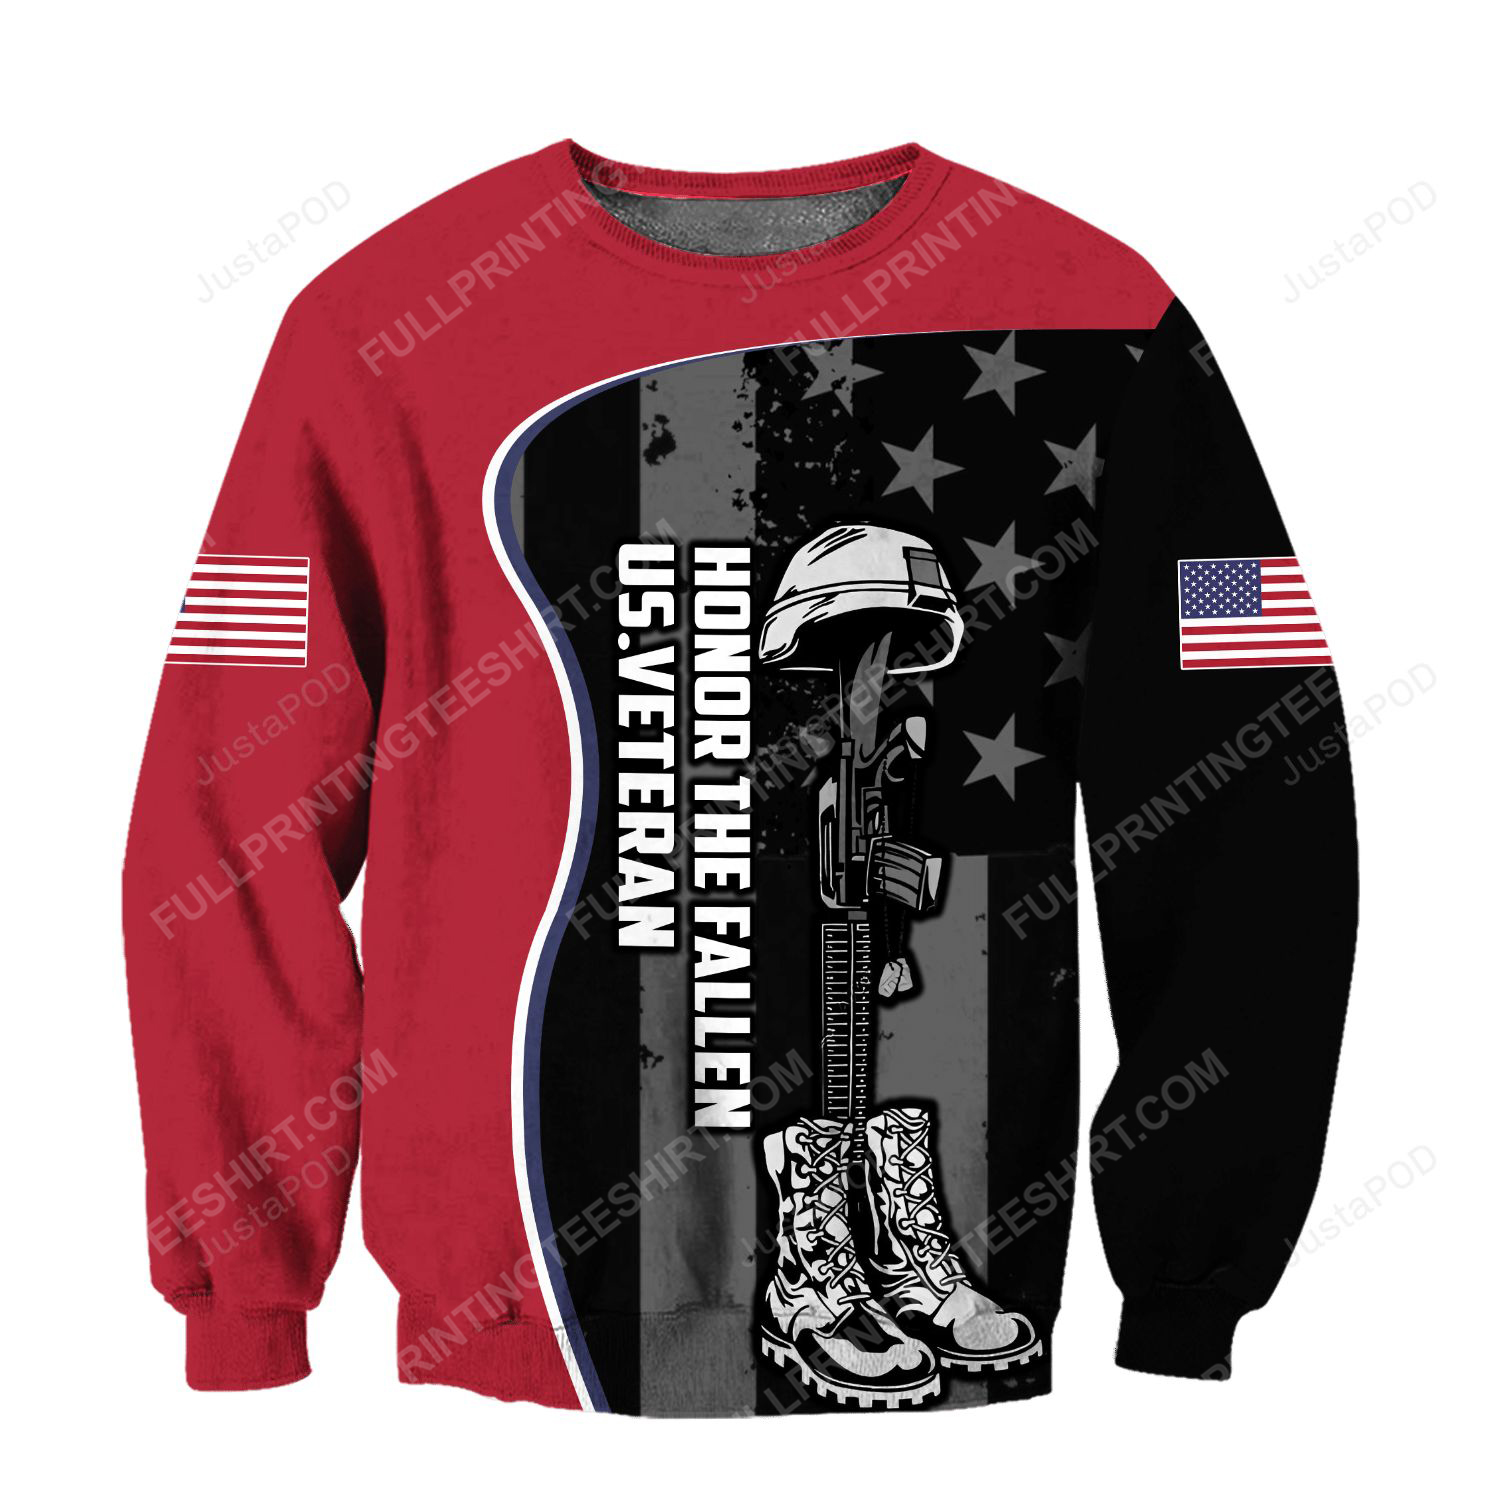 US veteran honor the fallen full print ugly christmas sweater